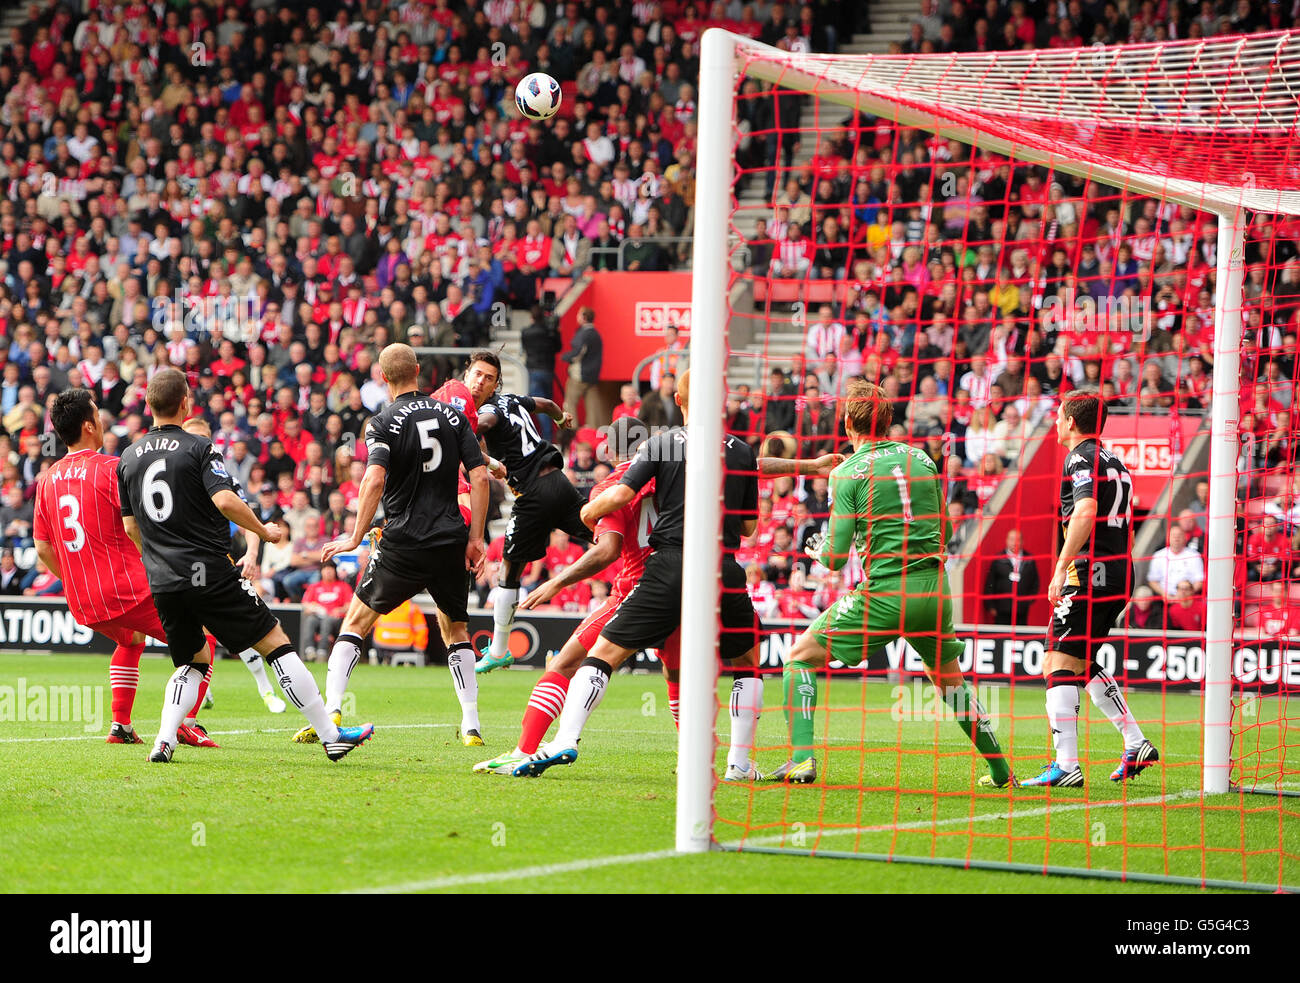 Fußball - Barclays Premier League - Southampton gegen Fulham - St. Mary's. Jose Fonte aus Southampton erzielt das erste Tor mit einem Looping-Kopfball Stockfoto